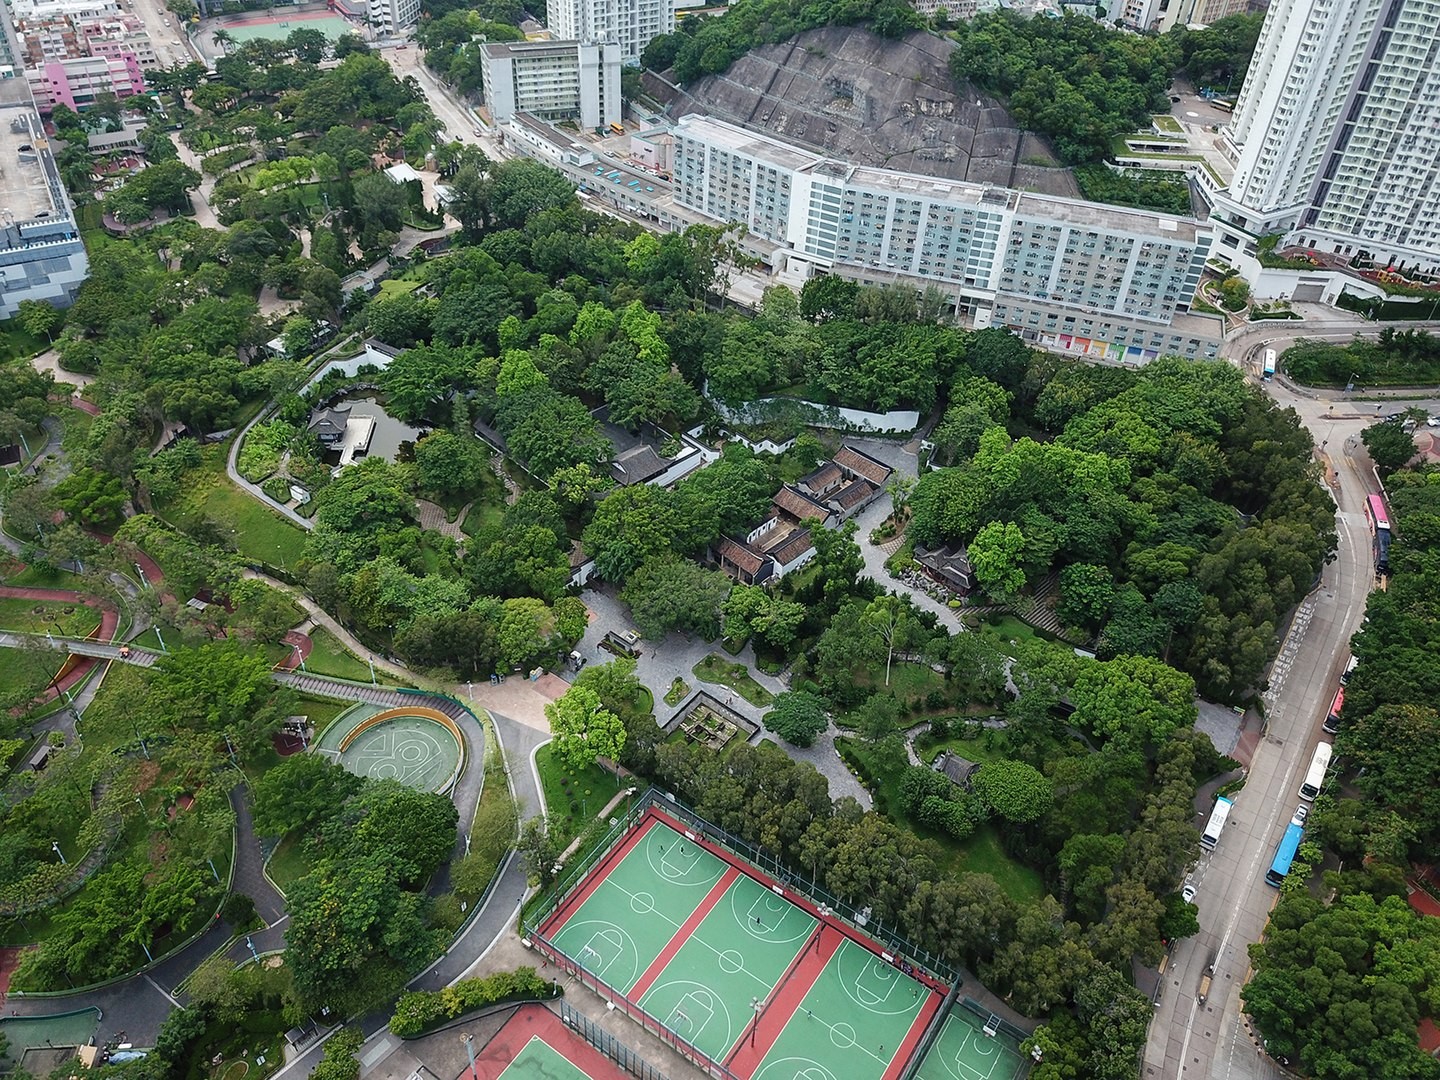 Kowloon Walled City Park